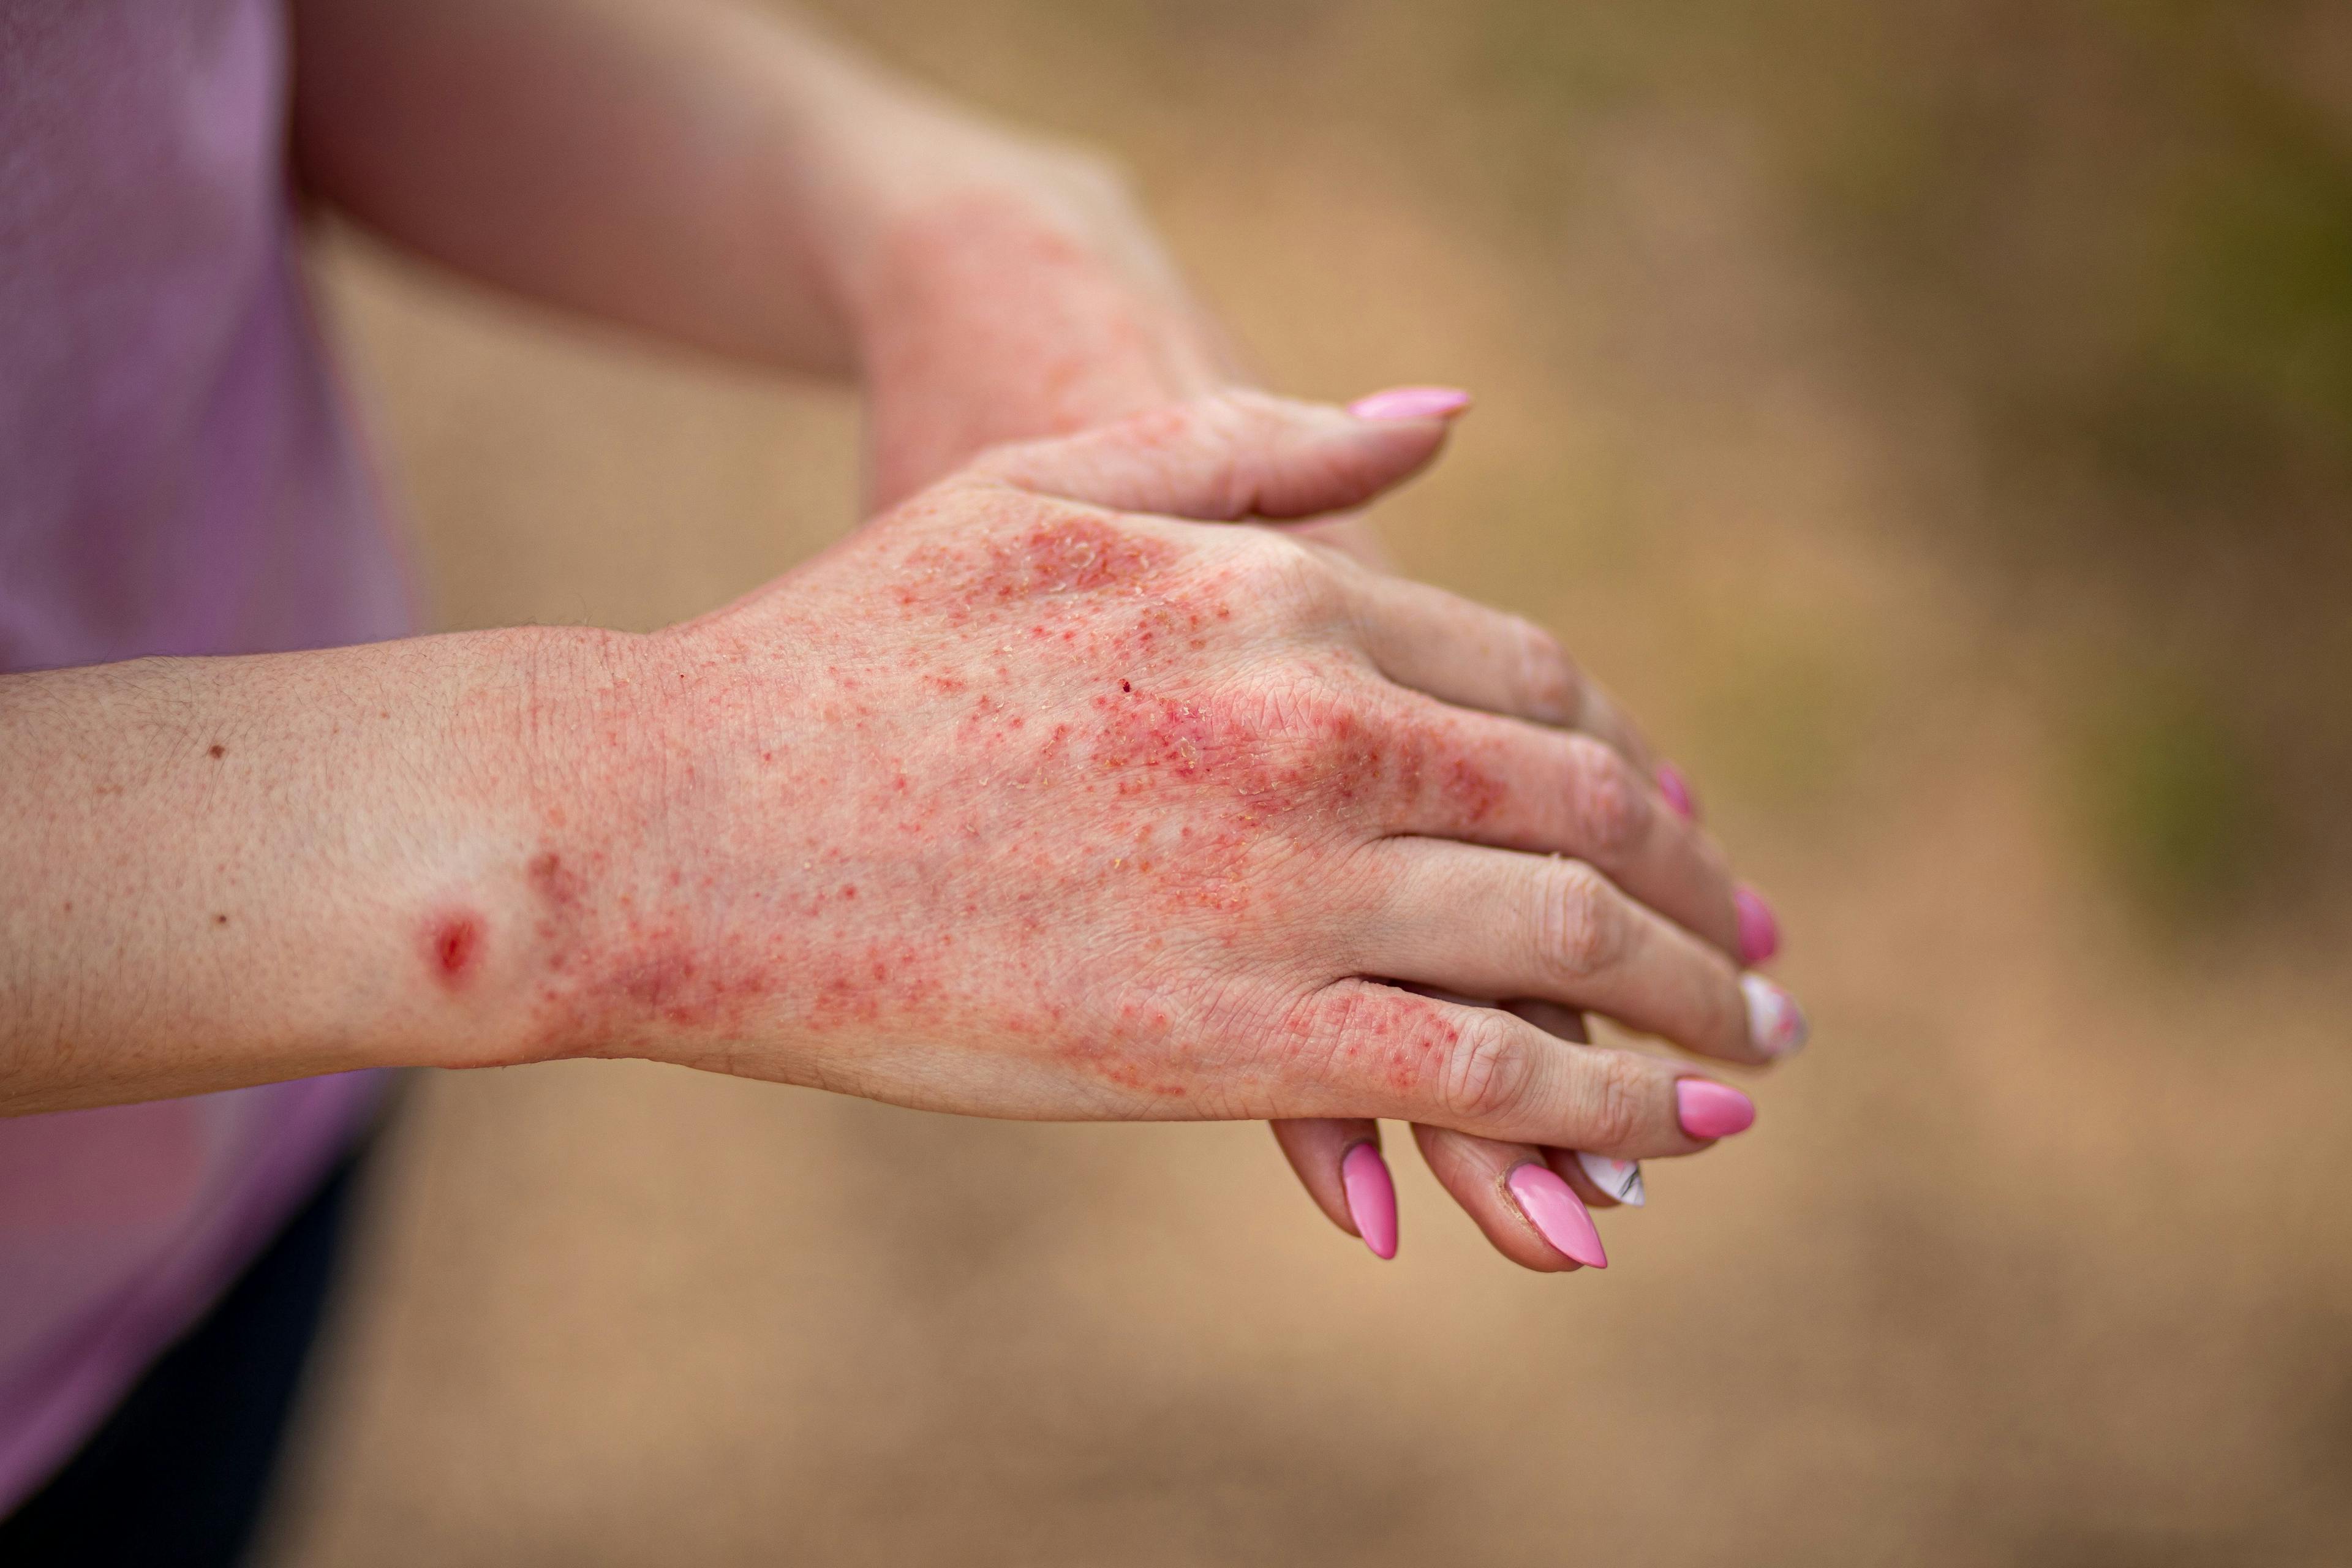 Adult with atopic dermatitis | Image Credit: InfiniteStudio - stock.adobe.com